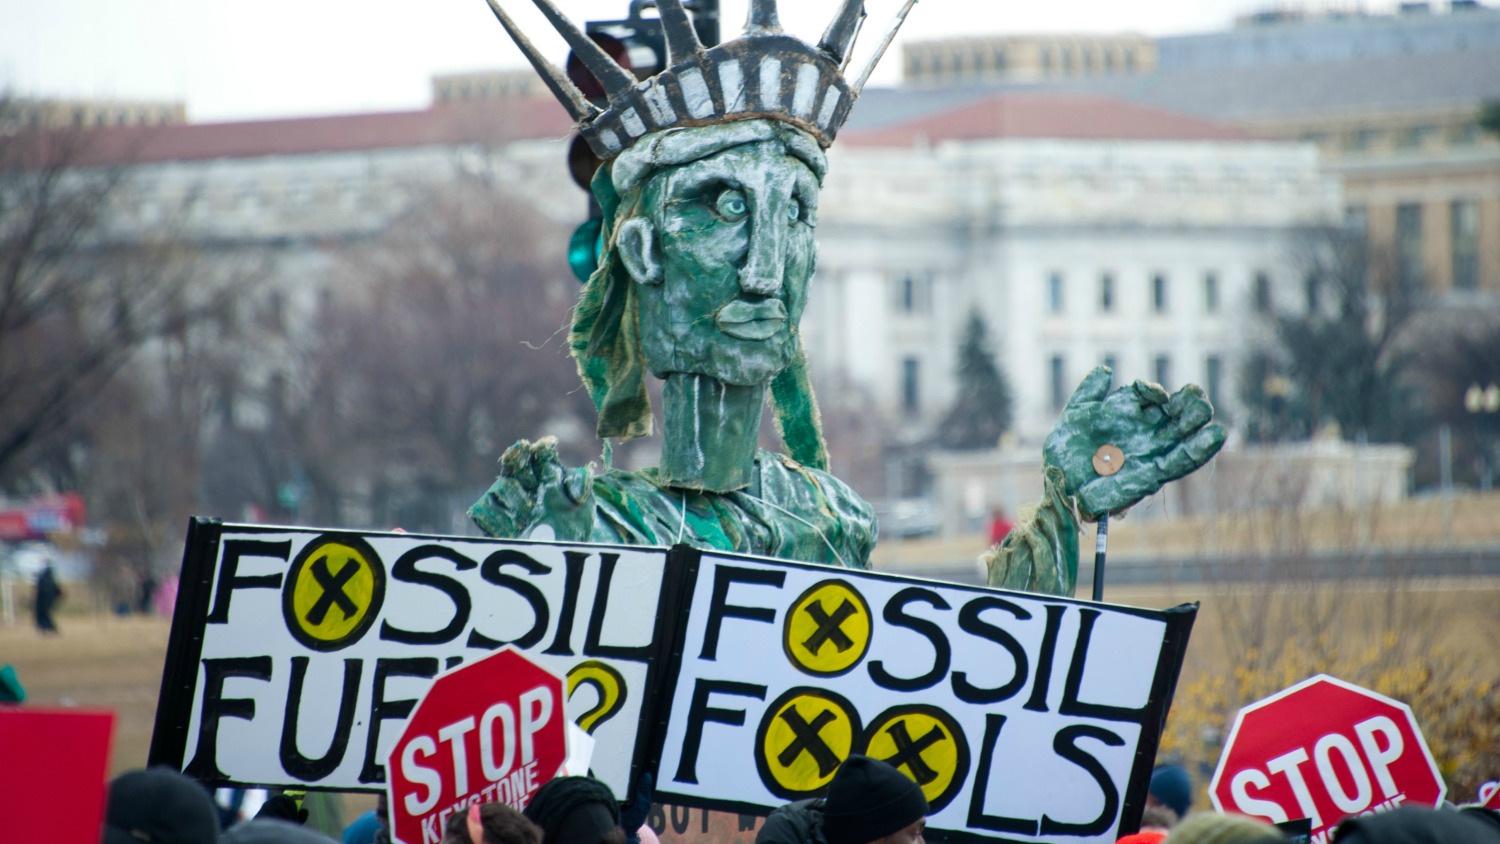 Keystone & fossil fuel protest